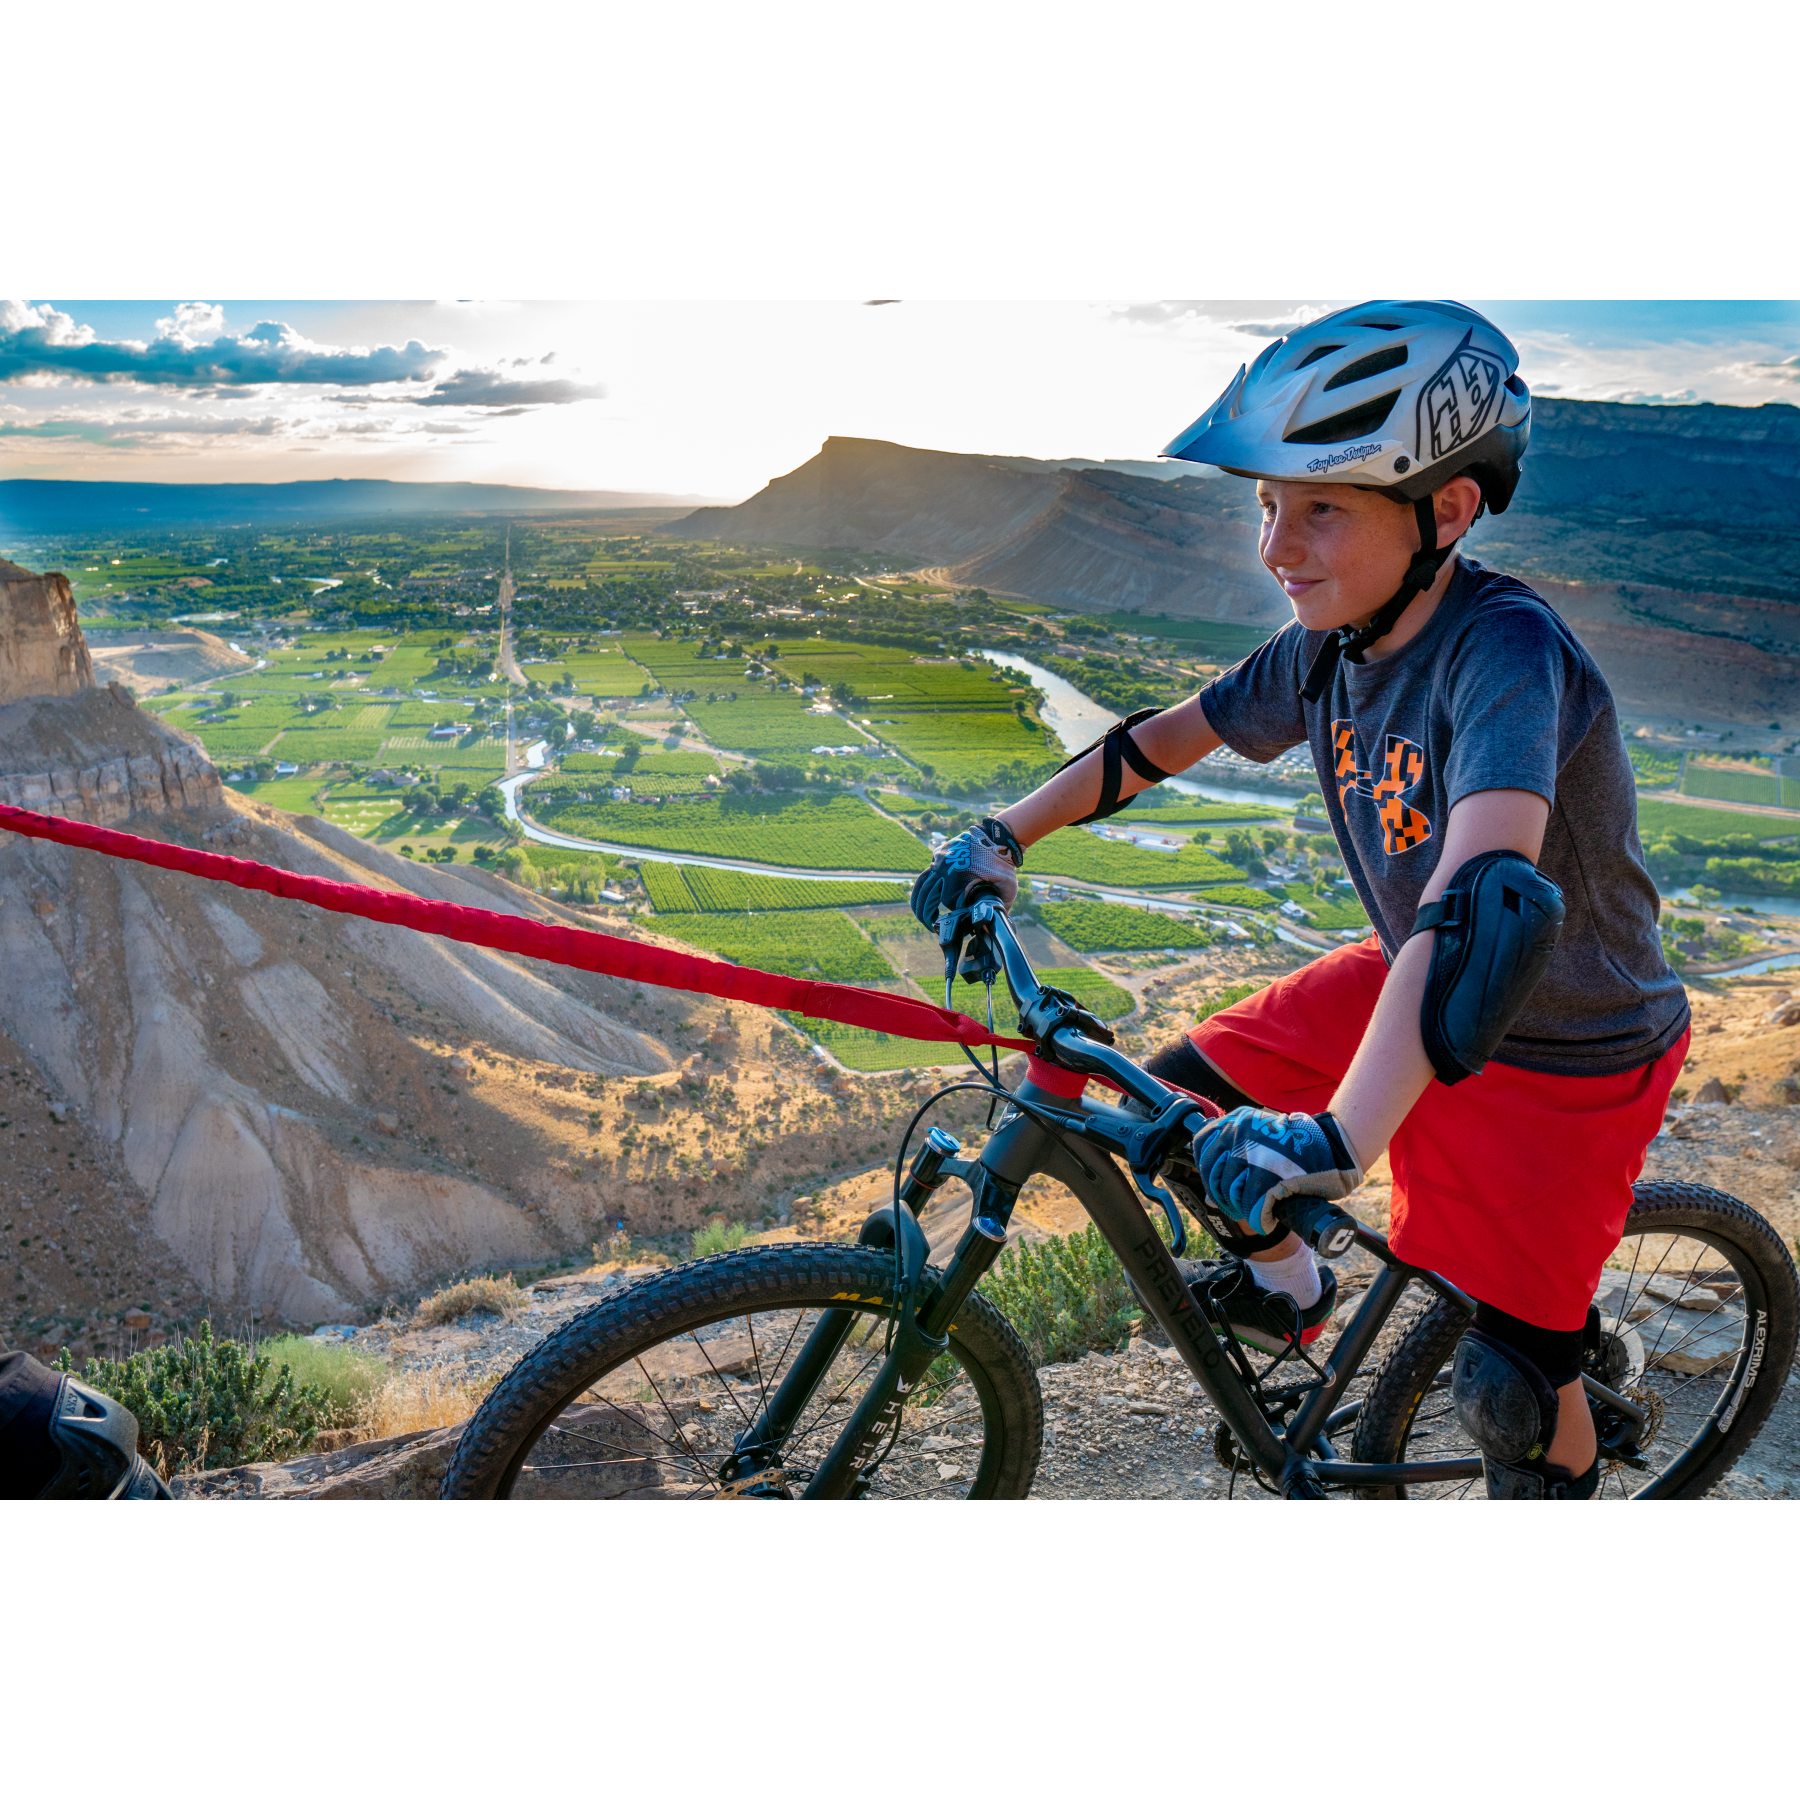 https://images.bike24.com/i/mb/8d/73/07/towwhee-original-kids-tow-rope-red-6-998569.jpg